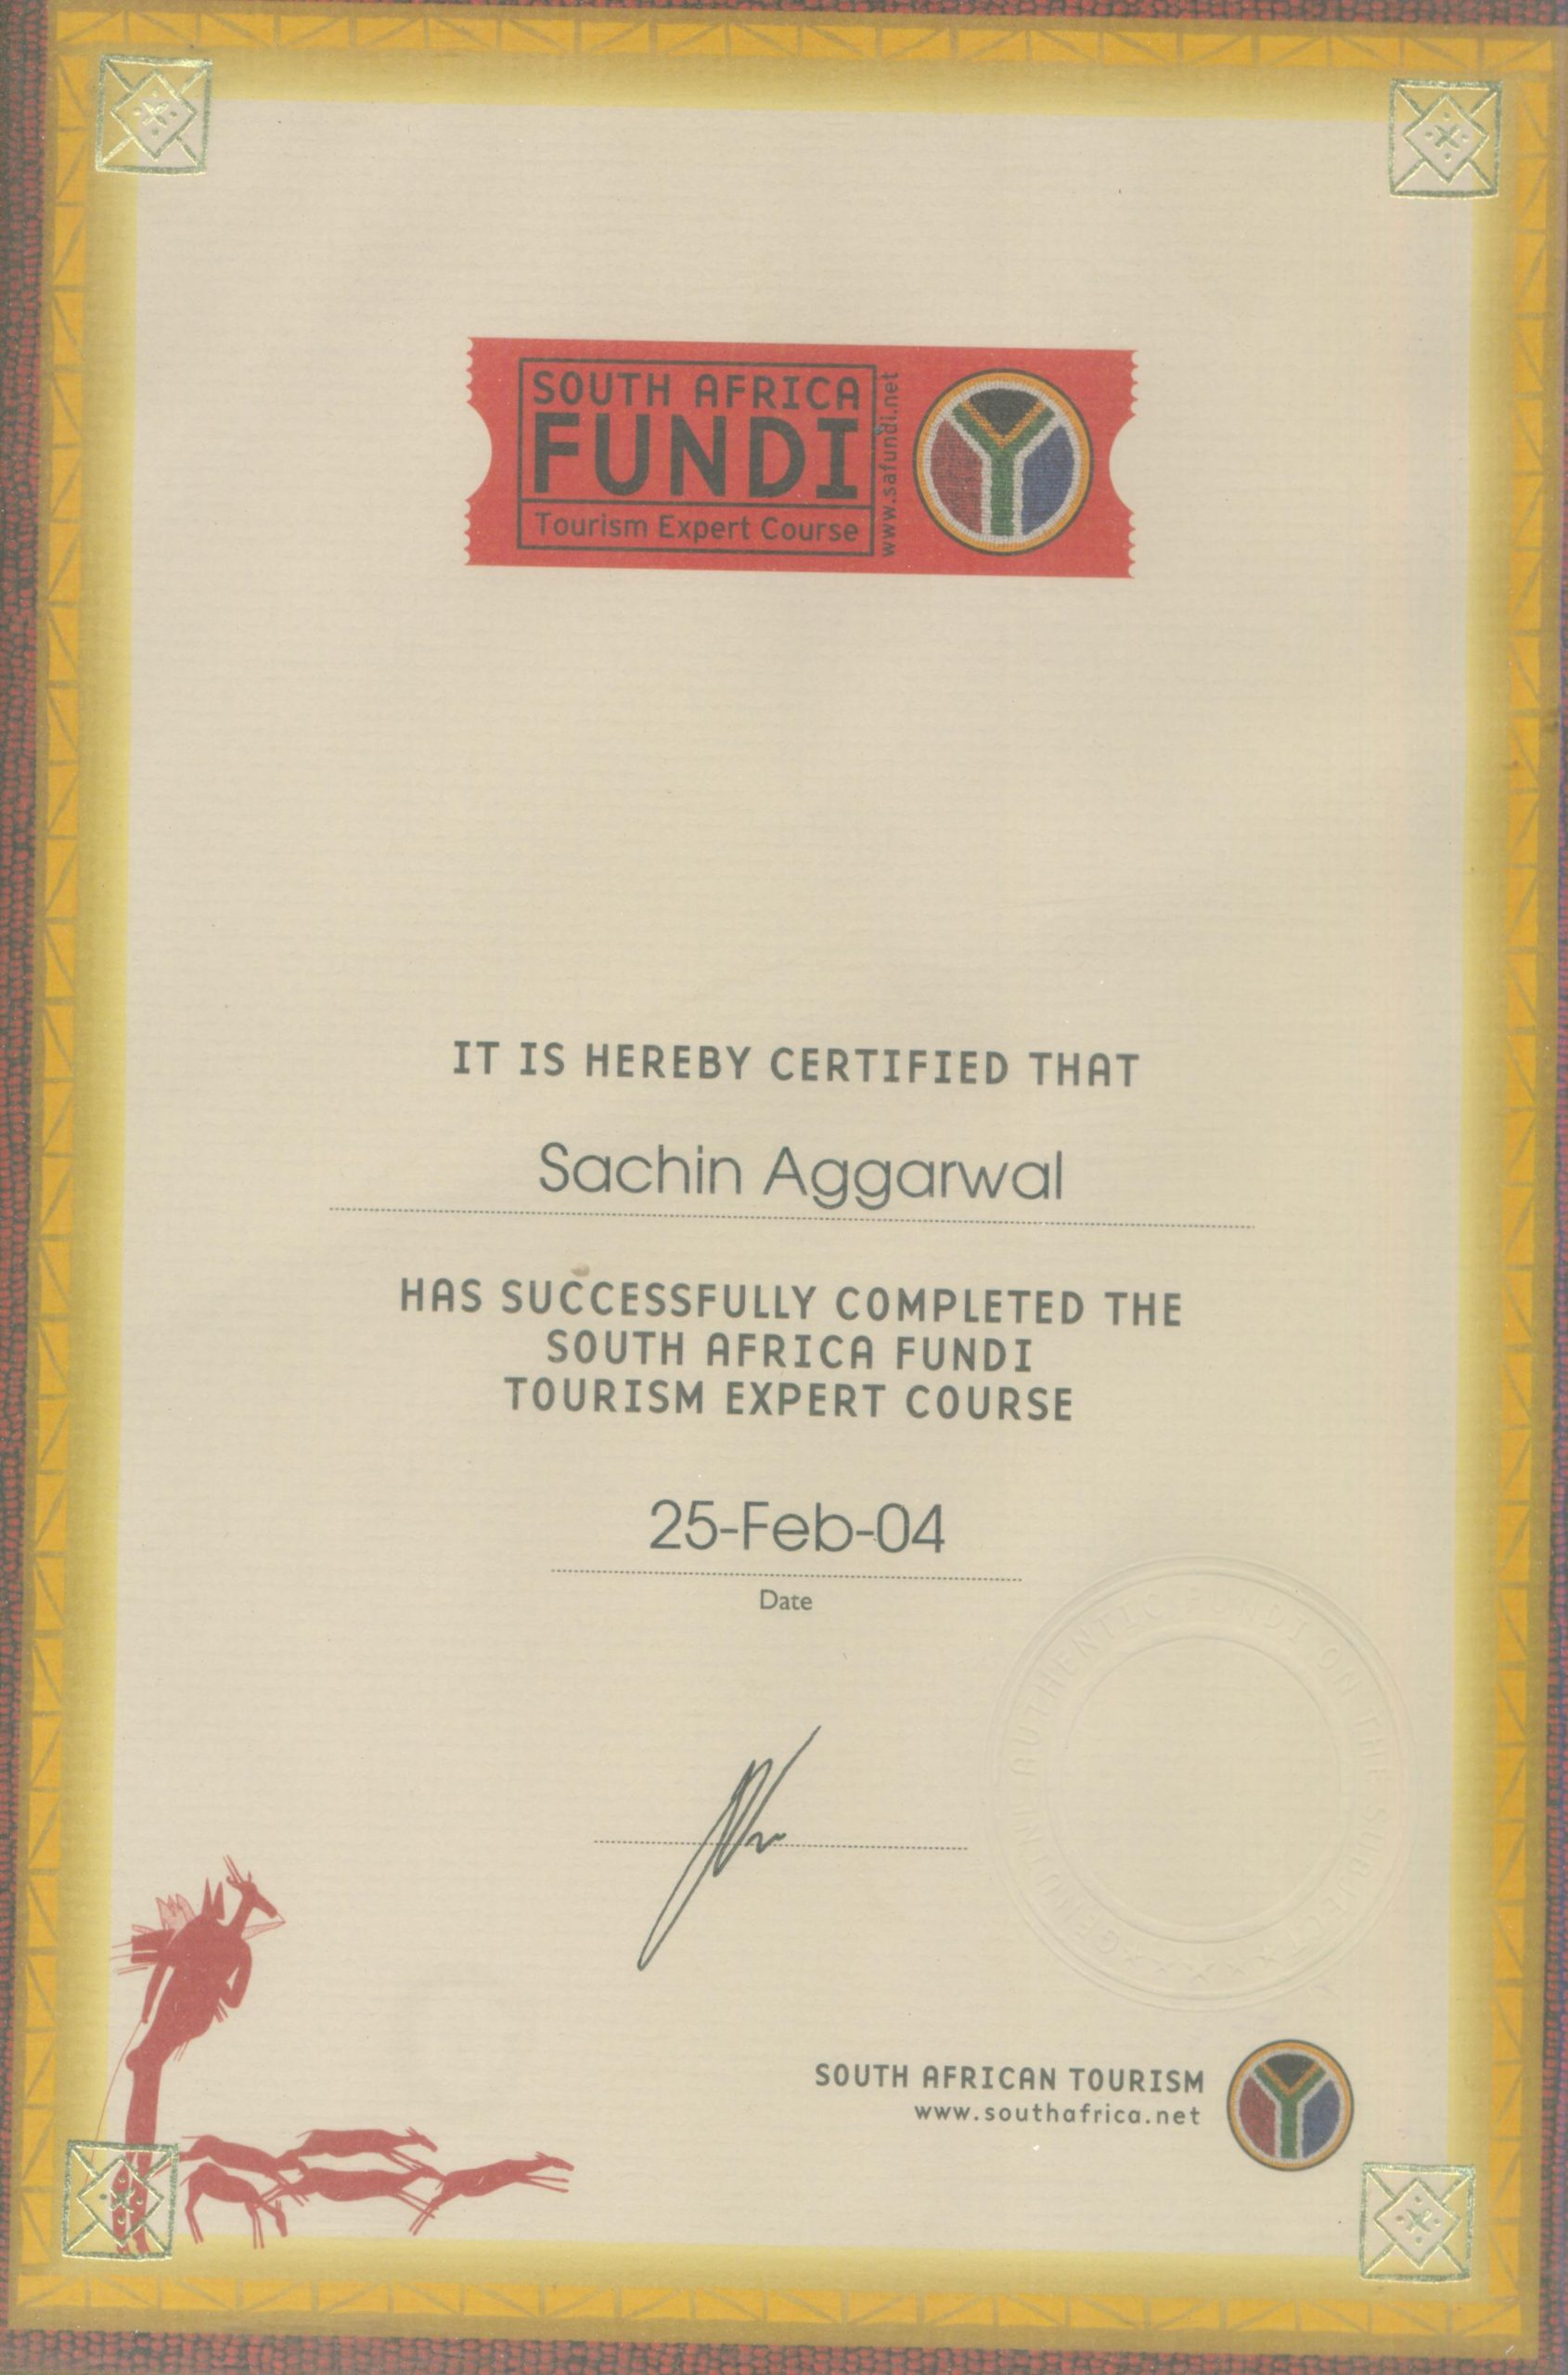 South Africa Specialist Fundi Specialist Certificate